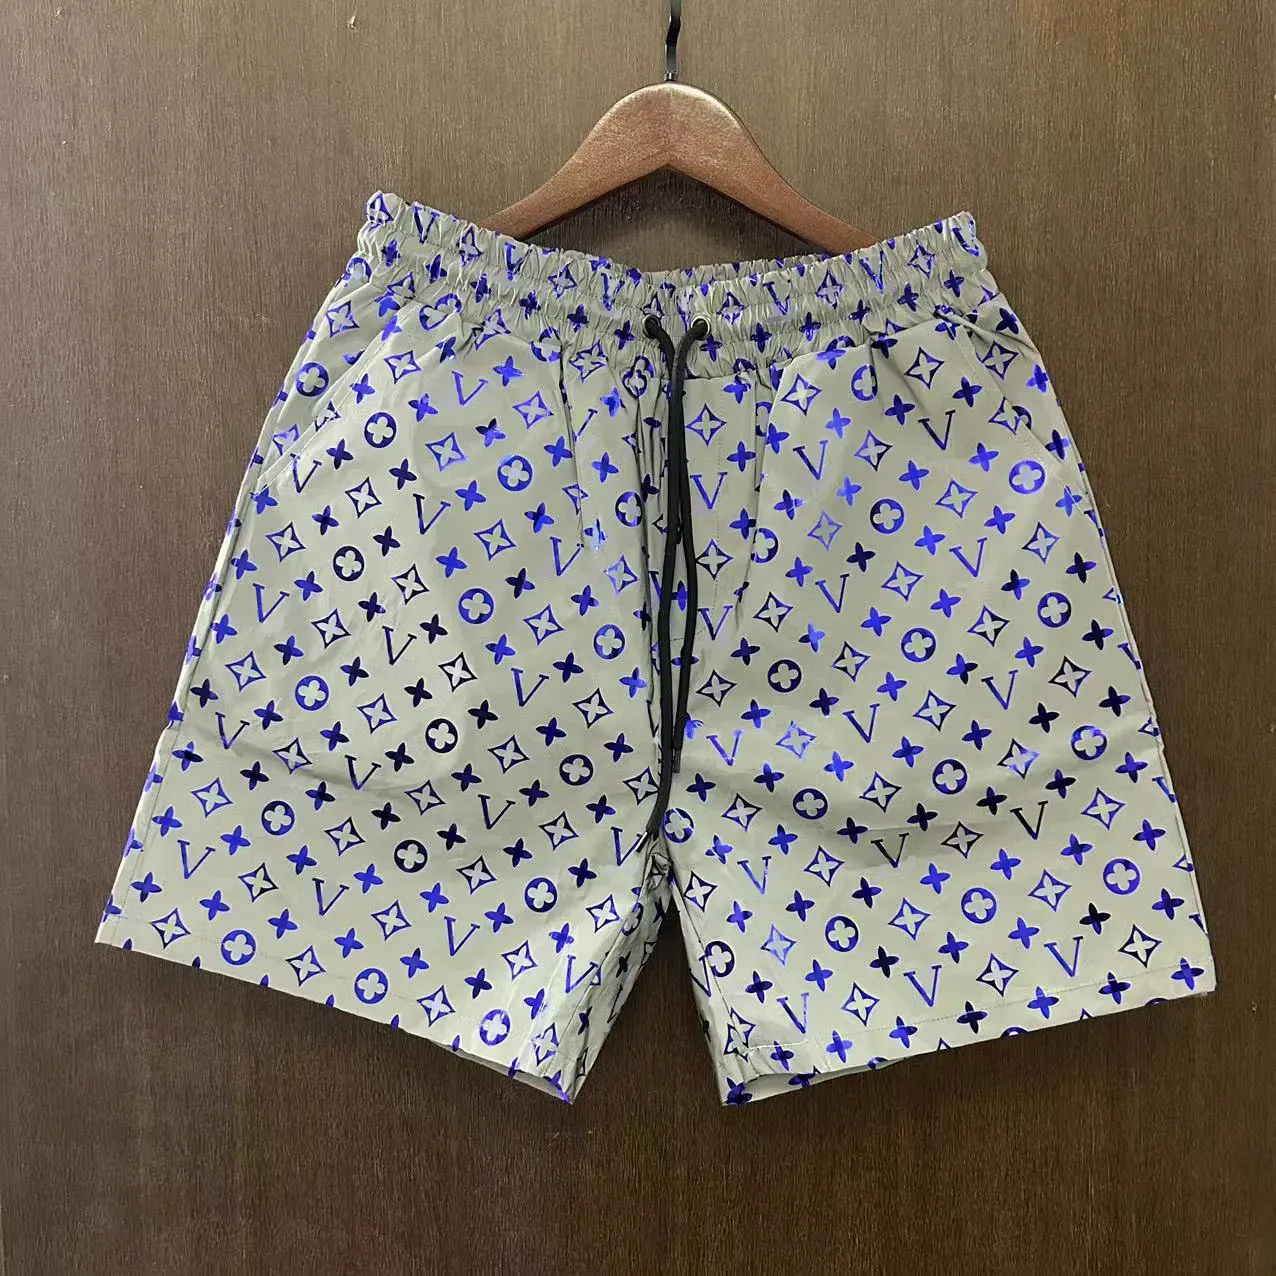 Summer Mens Shorts Mix brands Designers Fashion Board Short Gym Sportswear Quick Drying SwimWear Printing Man S Clothing Swim Beach Pants Asian Size